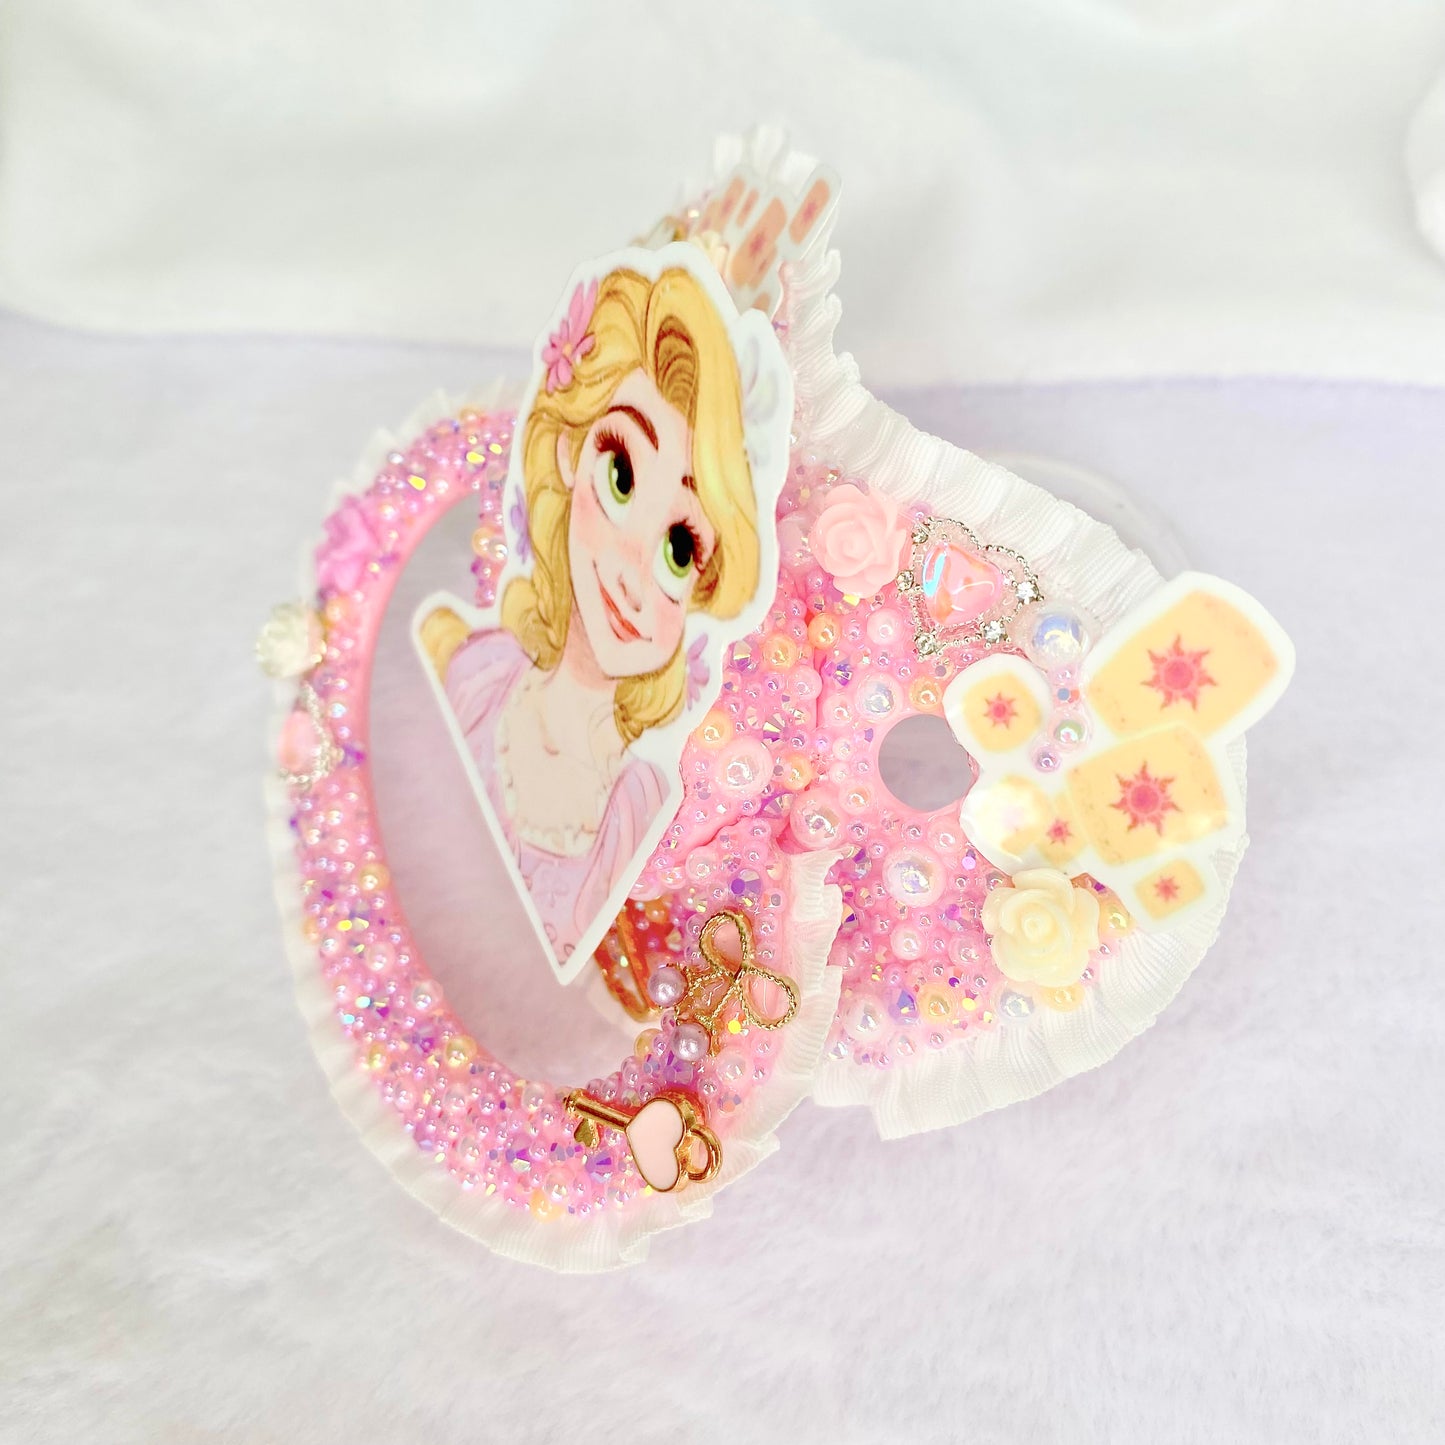 Lost Princess Rapunzel - Jumbo adult pacifier